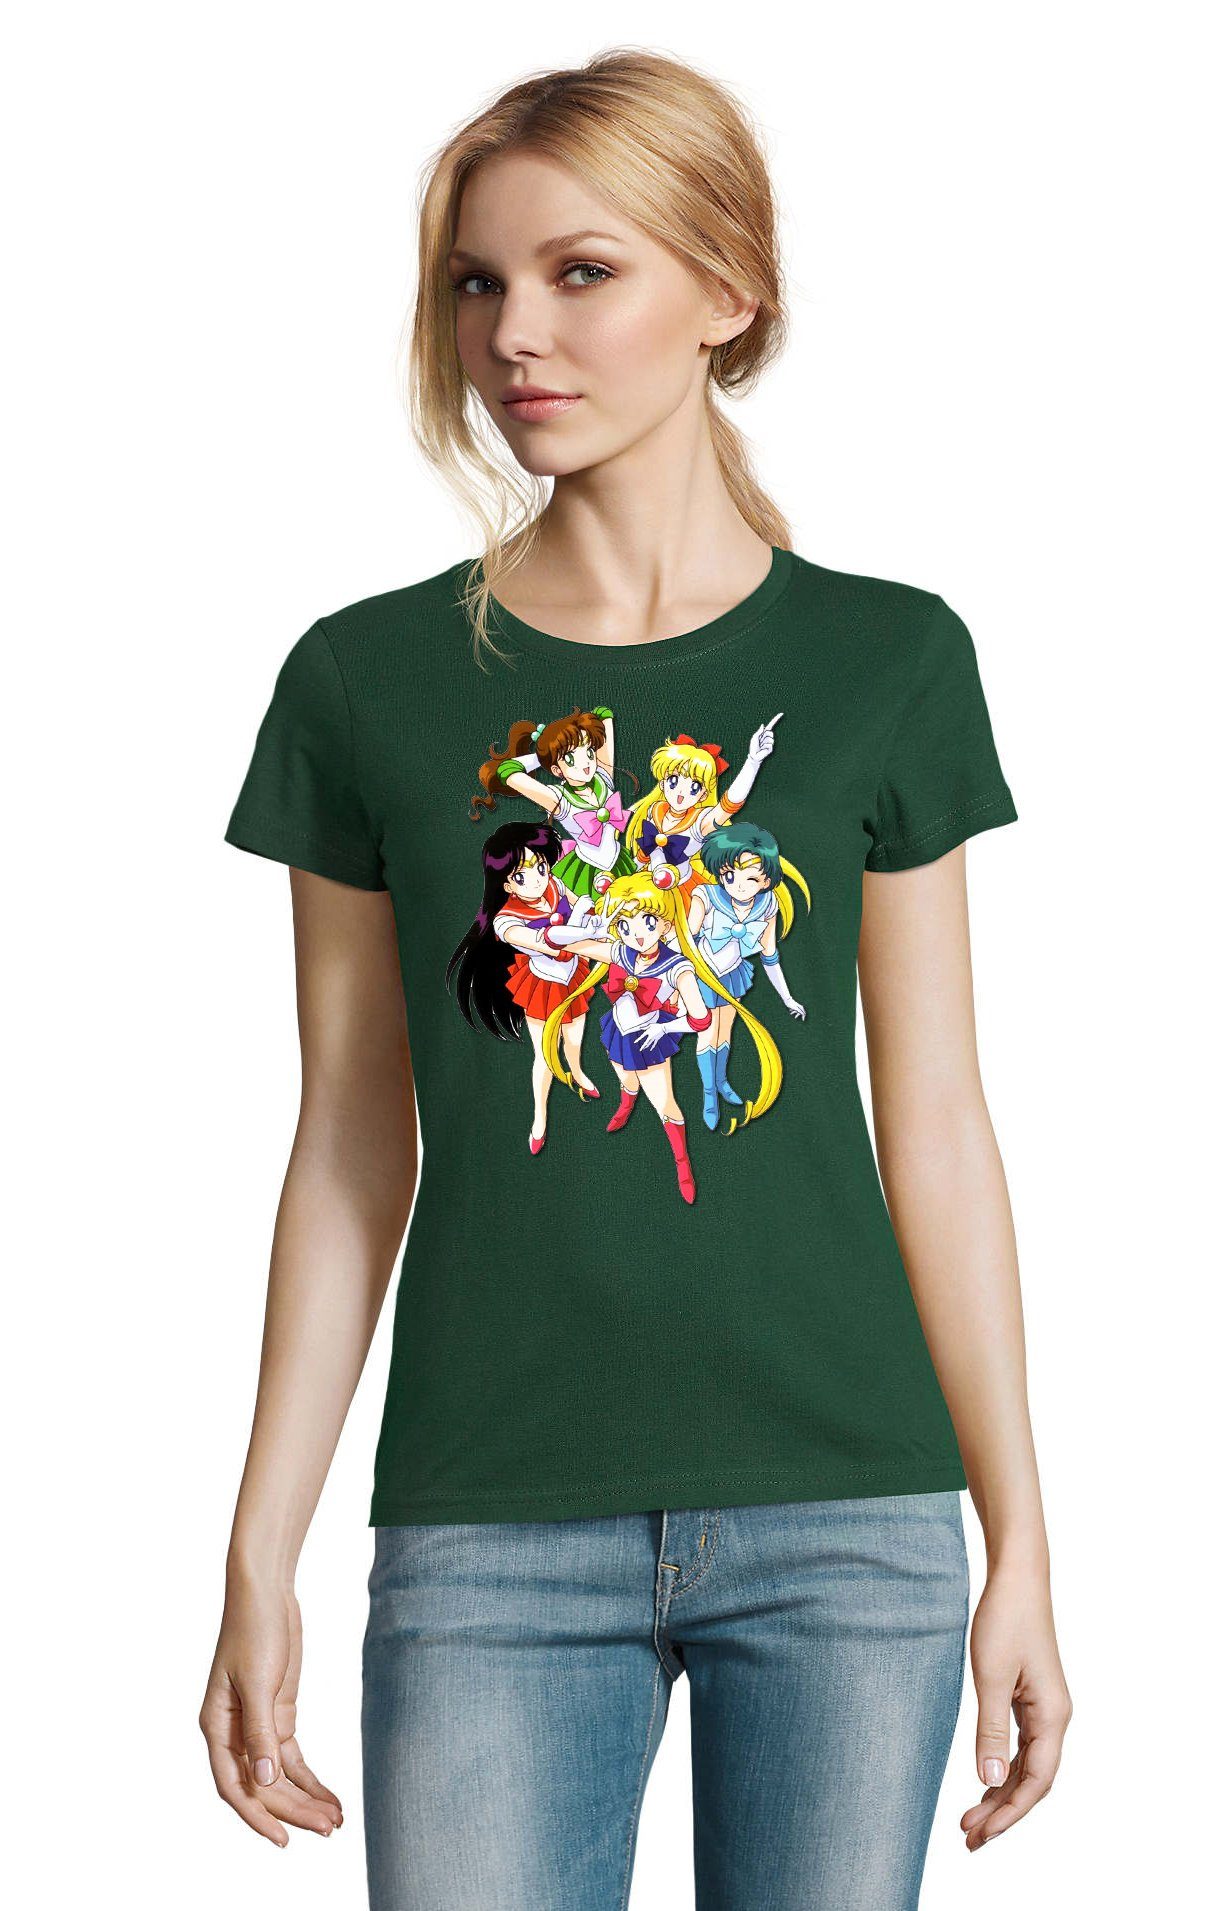 Blondie & Brownie T-Shirt Damen Fun Comic Sailor Moon and Friends Anime Manga Flaschengrün